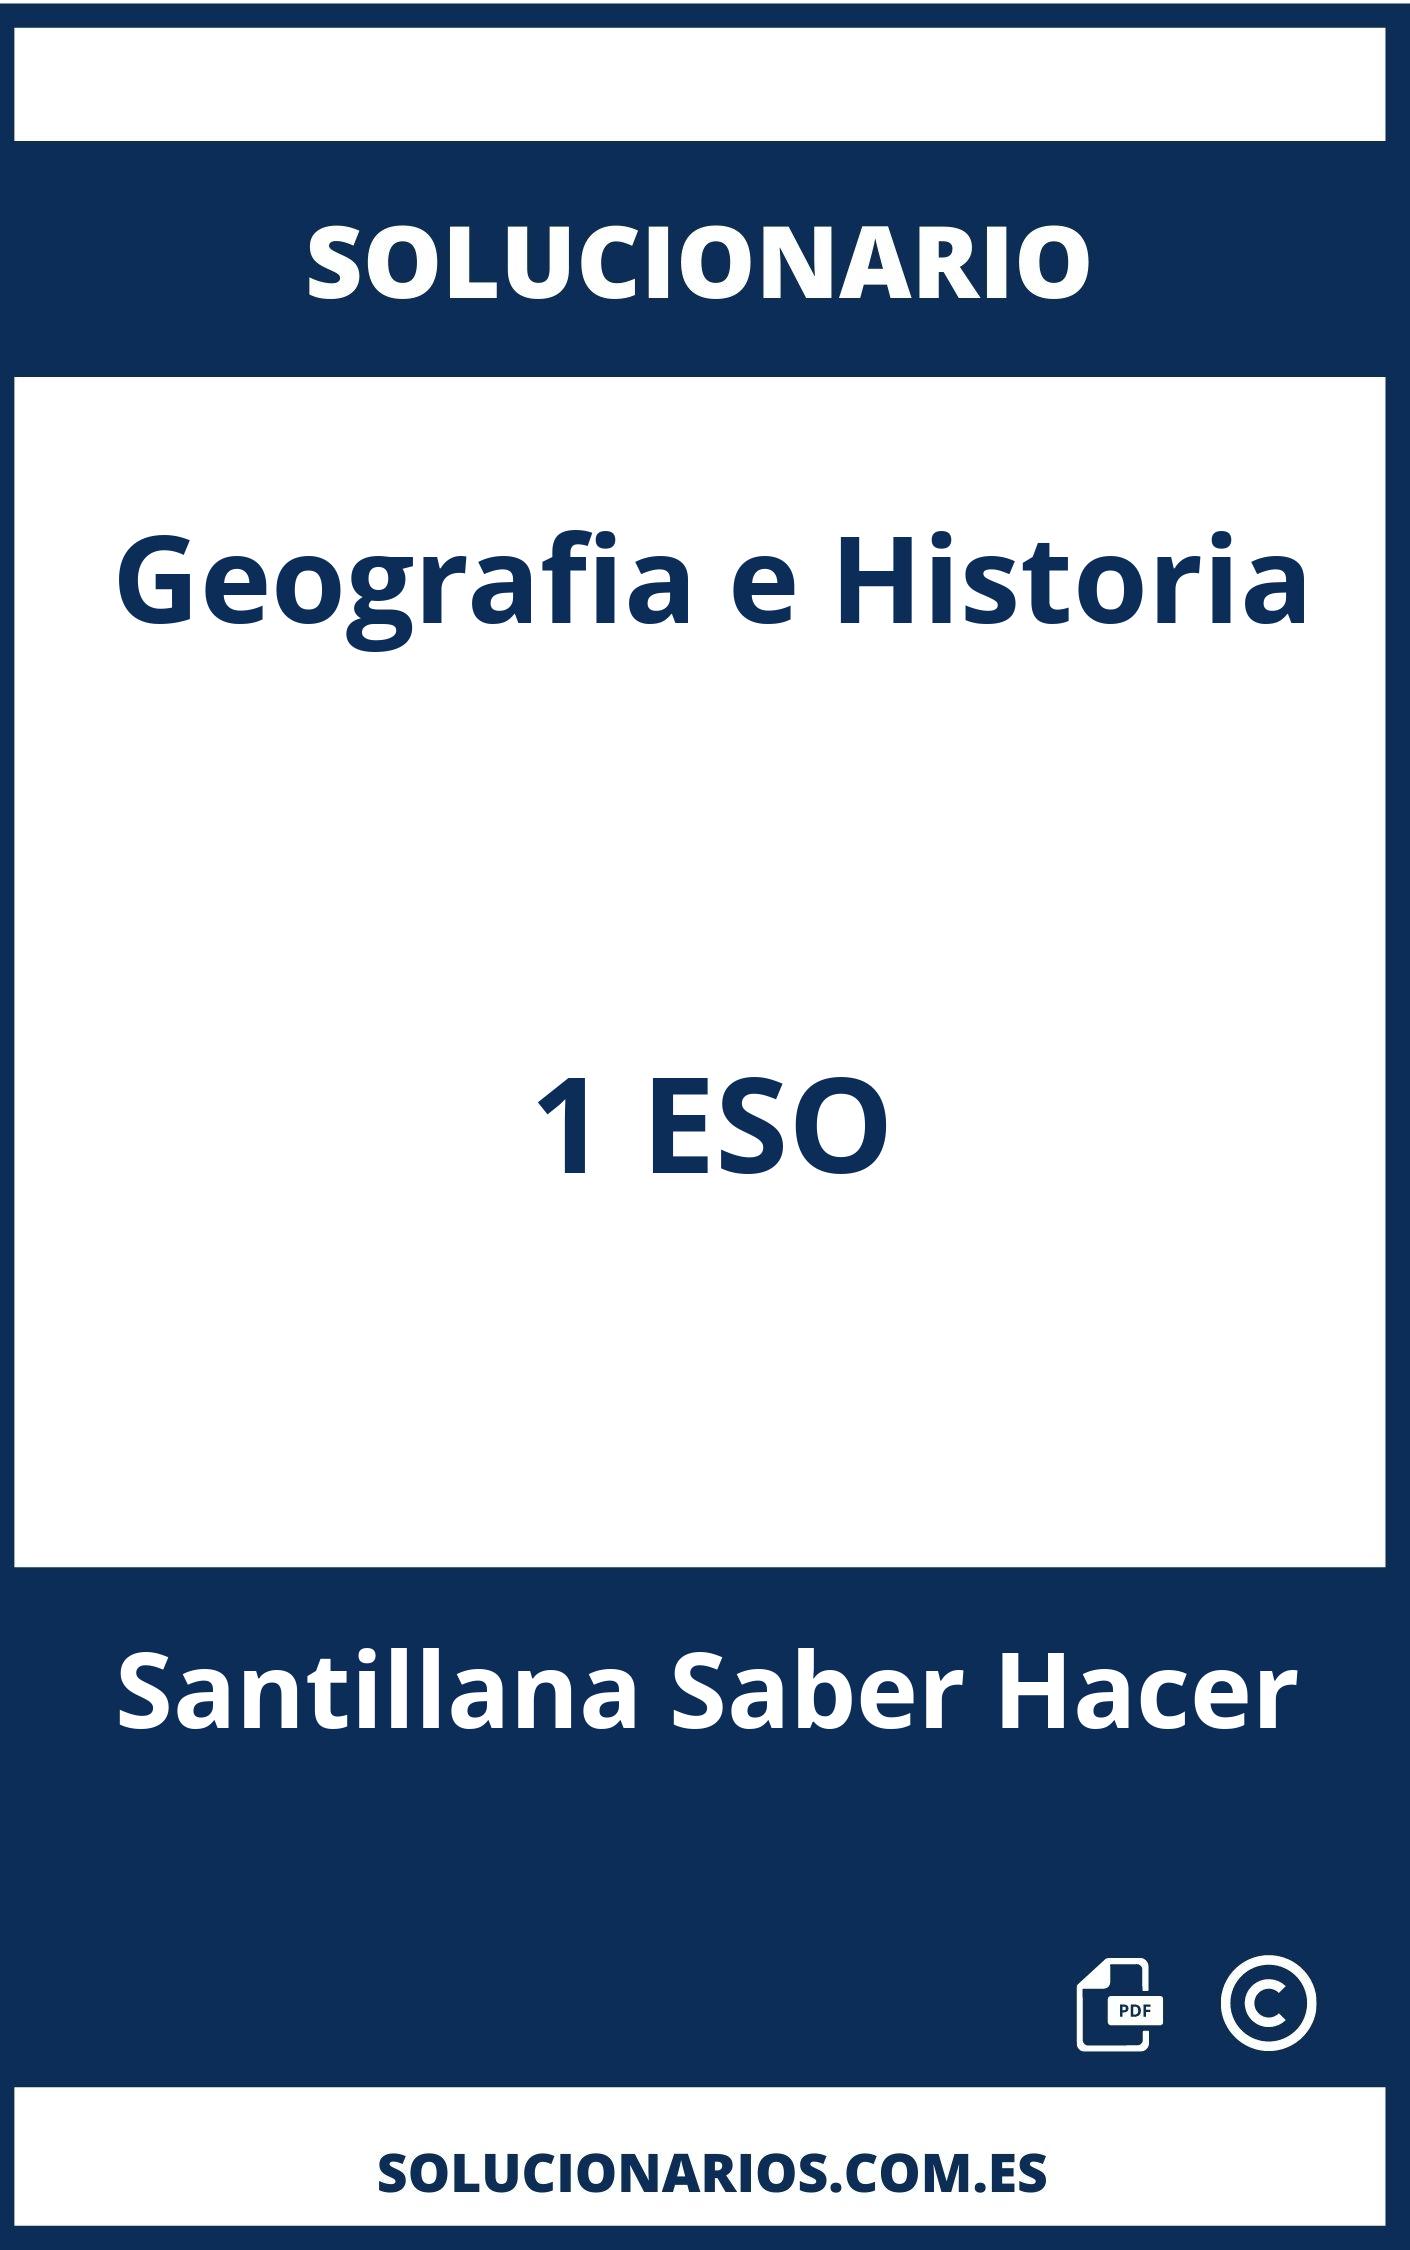 Solucionario Geografia e Historia 1 ESO Santillana Saber Hacer